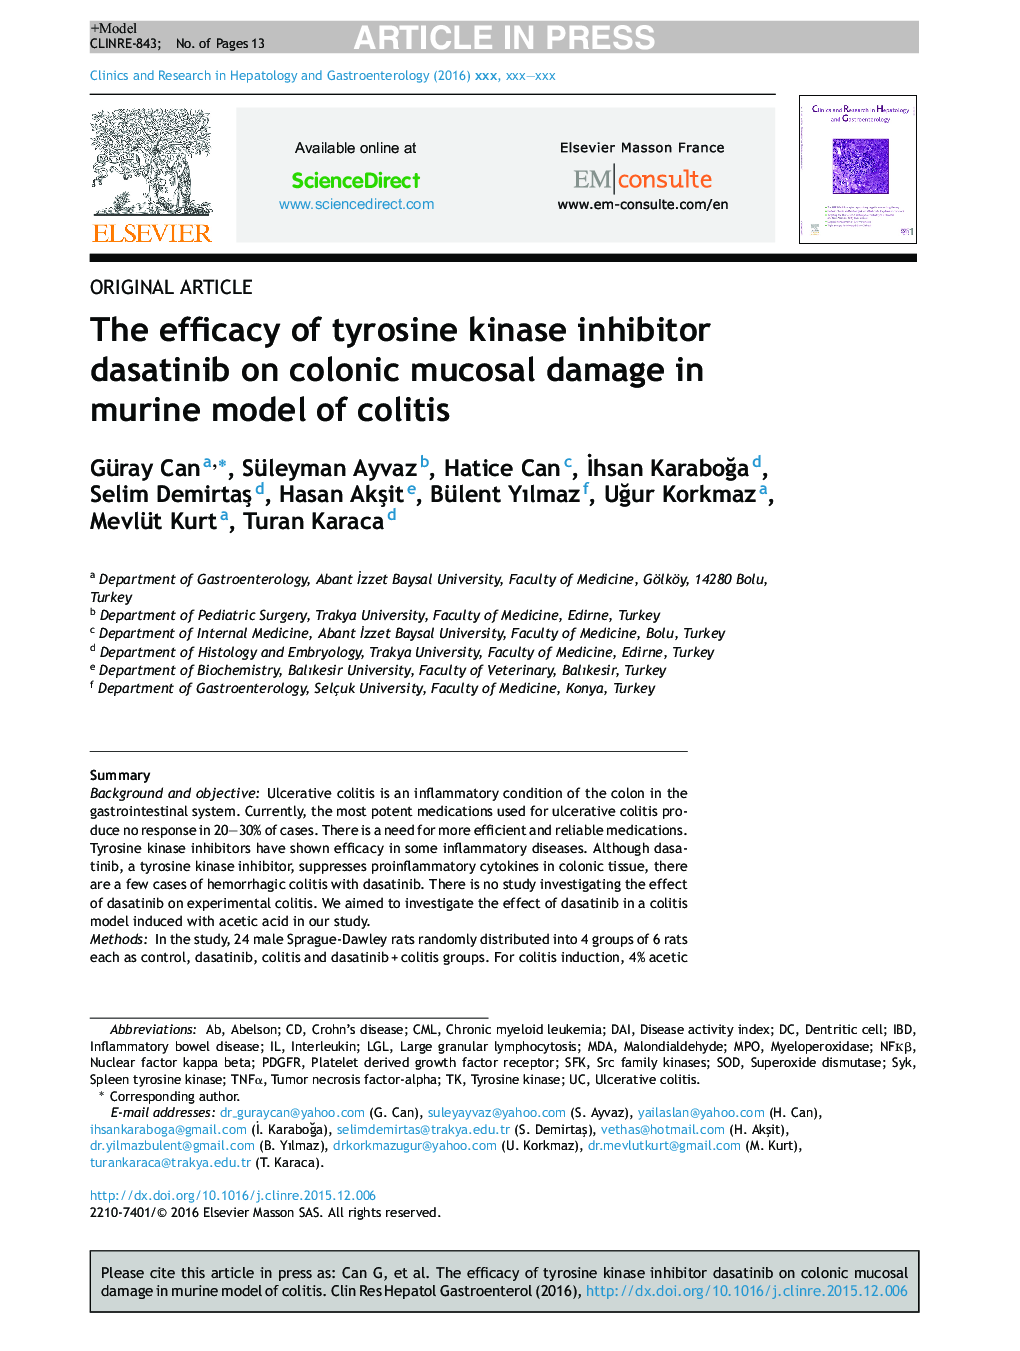 The efficacy of tyrosine kinase inhibitor dasatinib on colonic mucosal damage in murine model of colitis